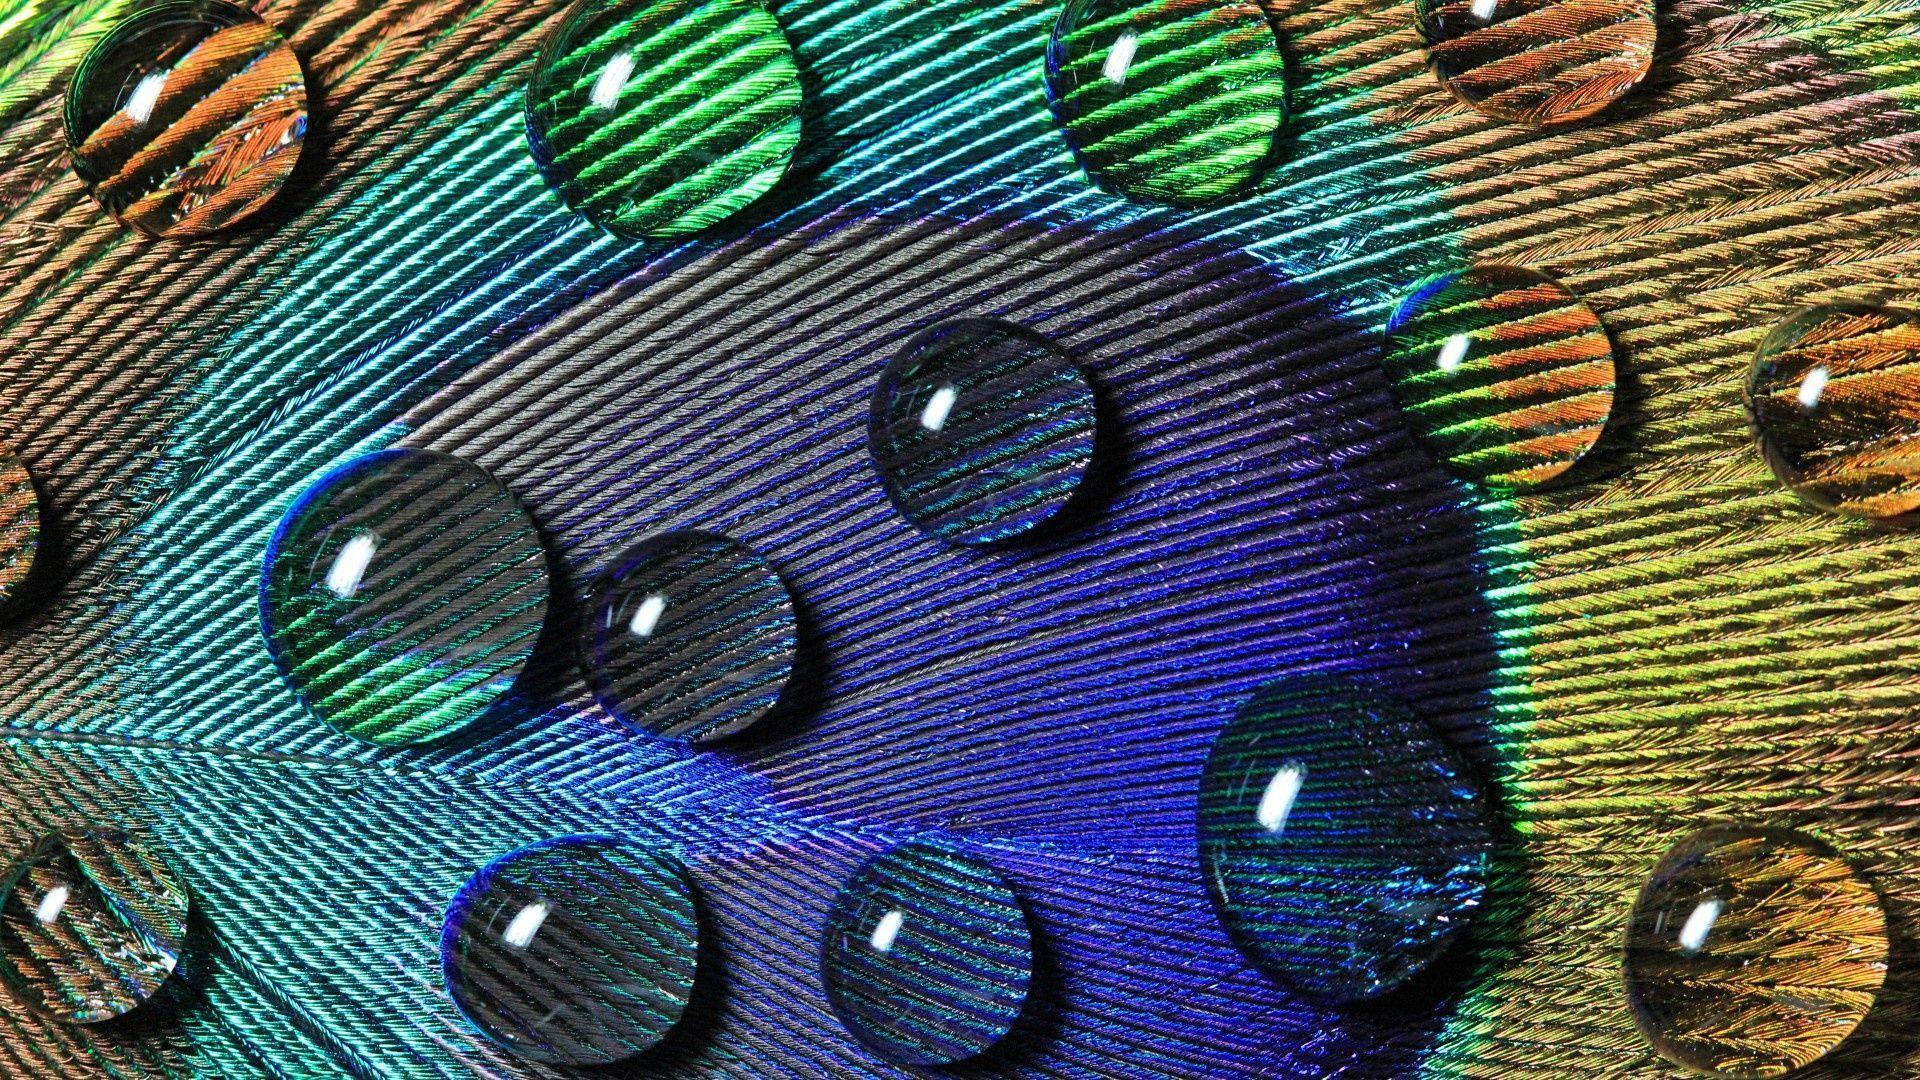 HD Peacock Wallpaper. Wallpaper, Background, Image, Art Photo